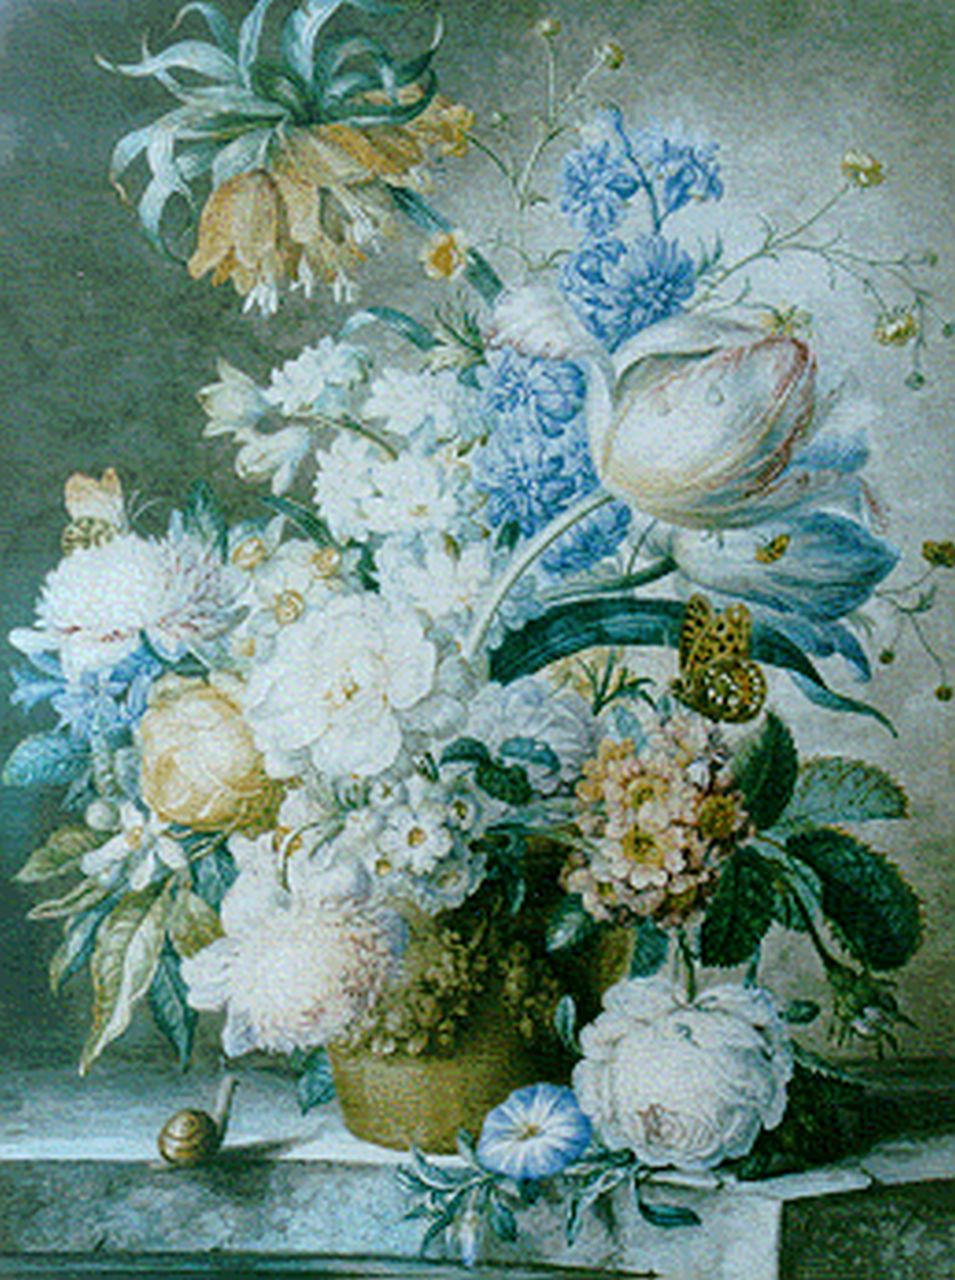 Wijnen O.  | Oswald Wijnen, A bunch of wildflowers, Aquarell auf Papier 30,3 x 23,0 cm, signed l.r. und dated 1777